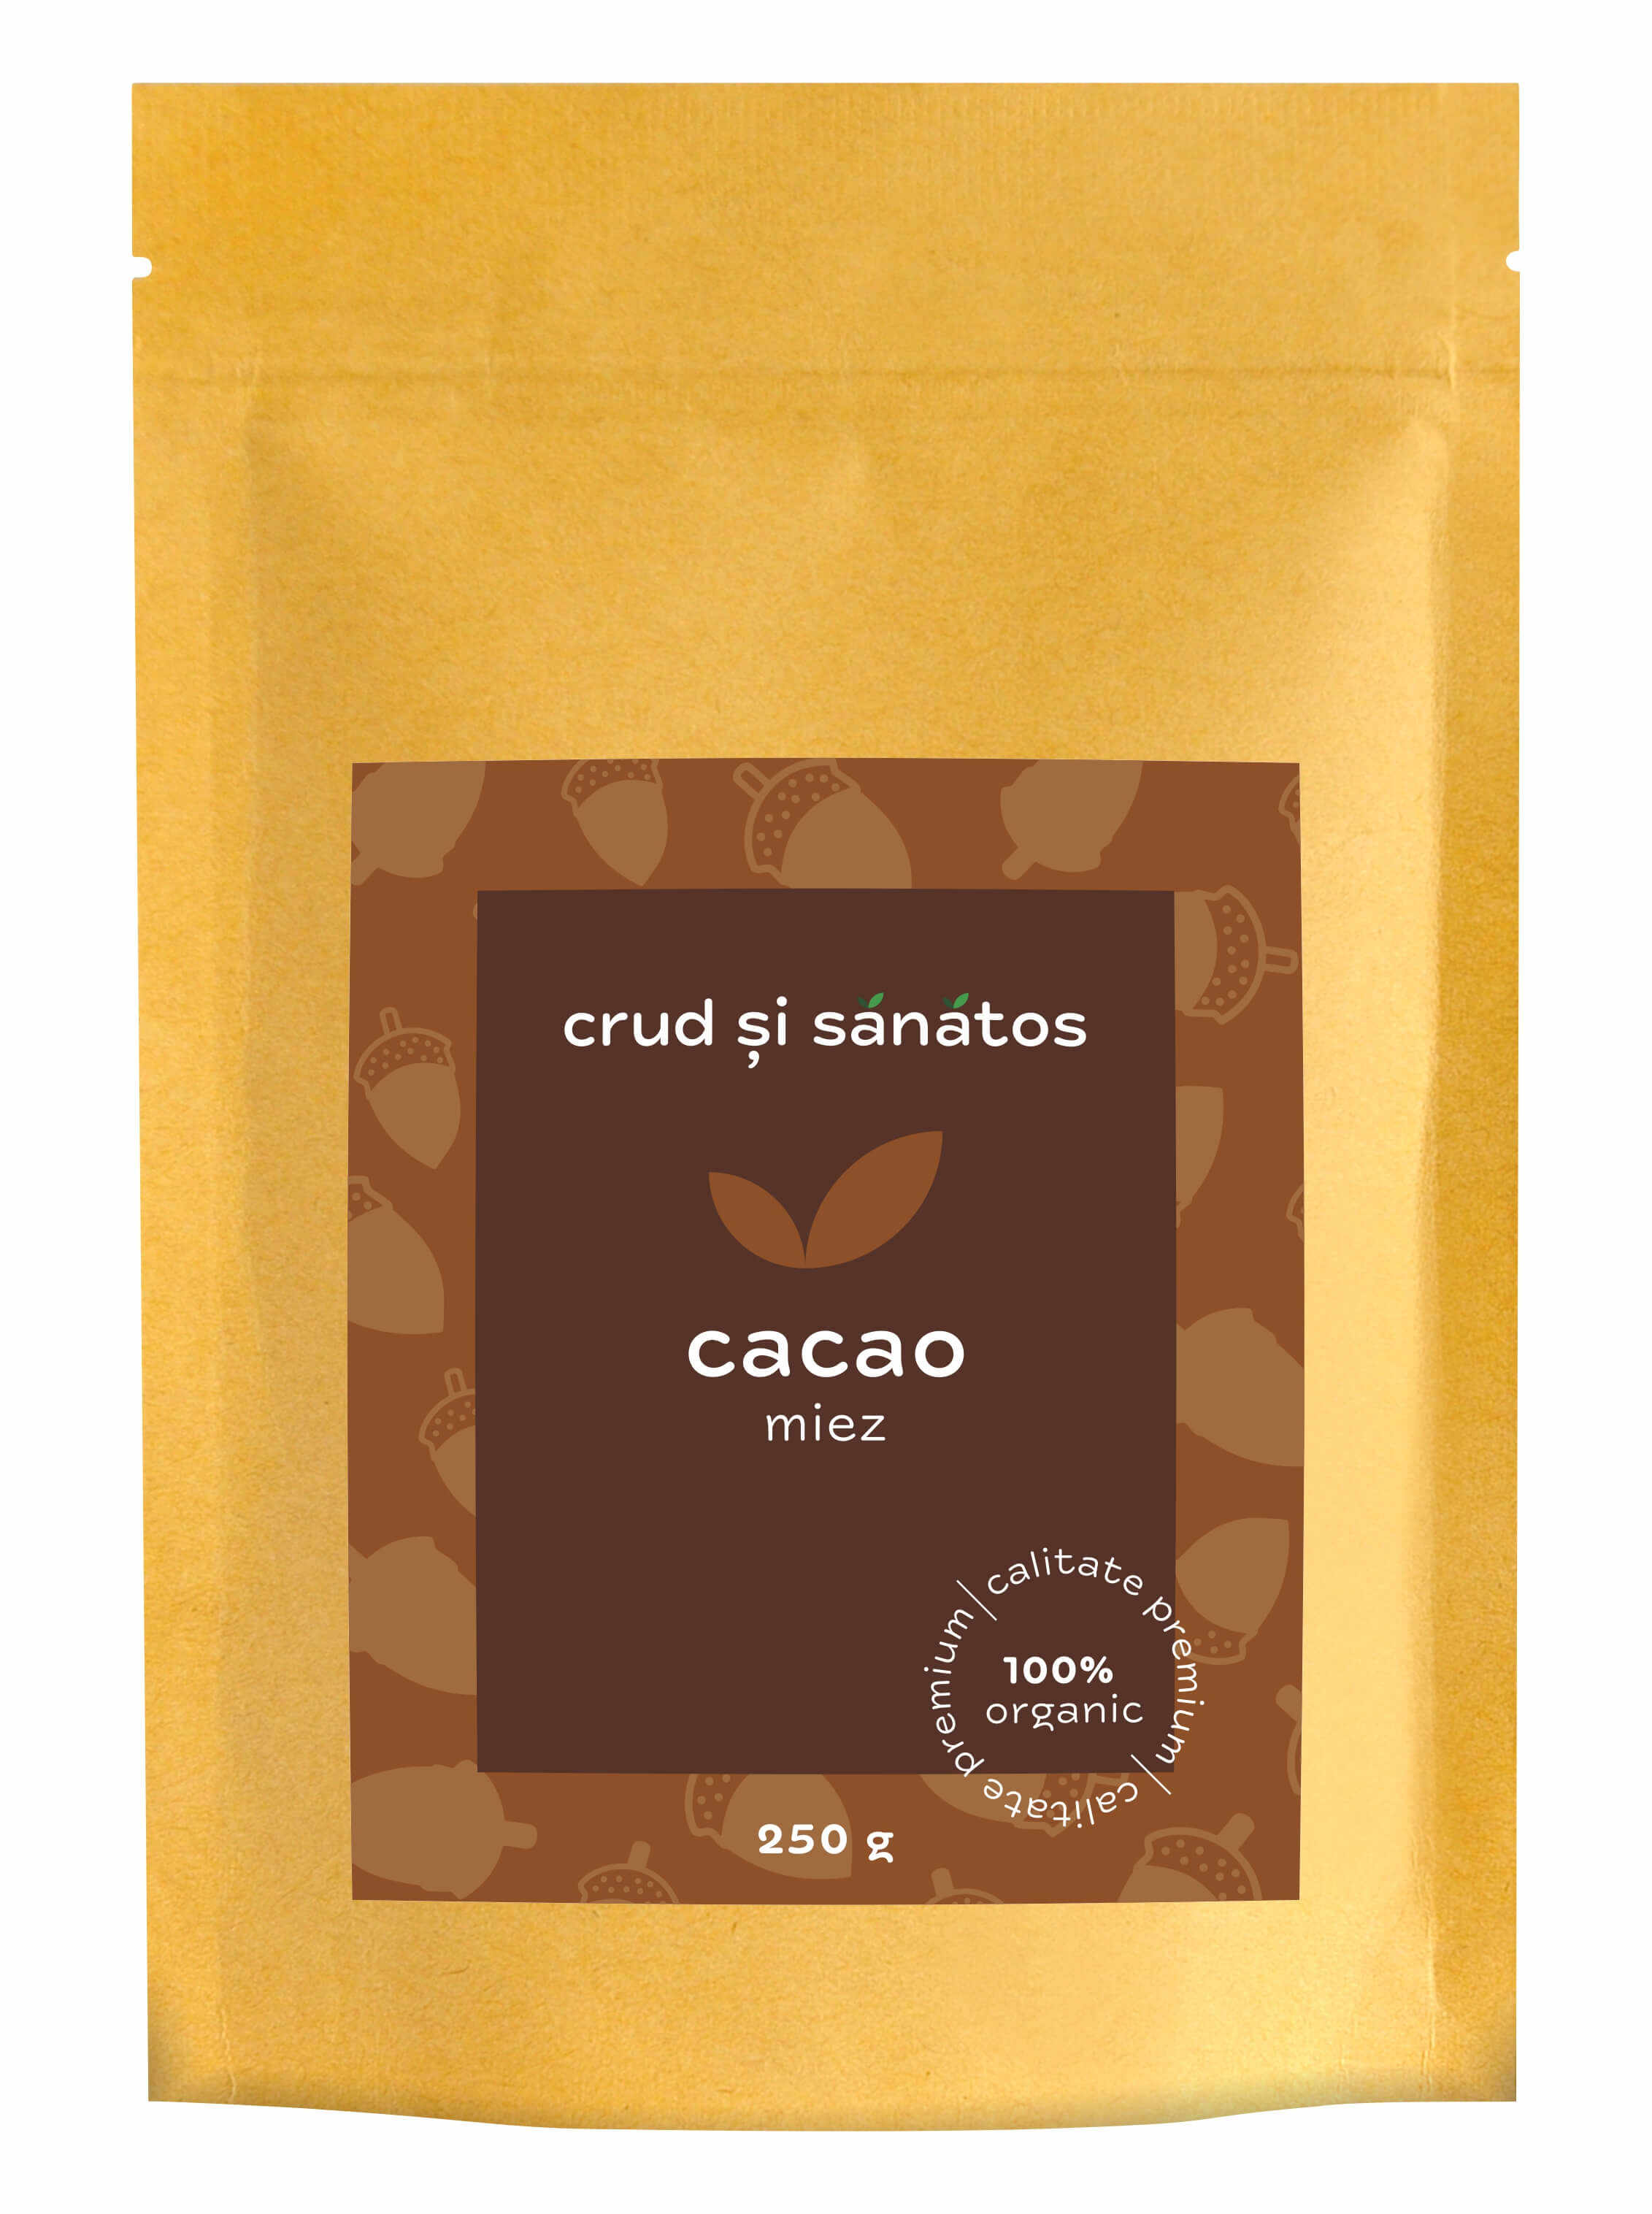 Cacao criollo miez, bio, 250g, crud si sanatos